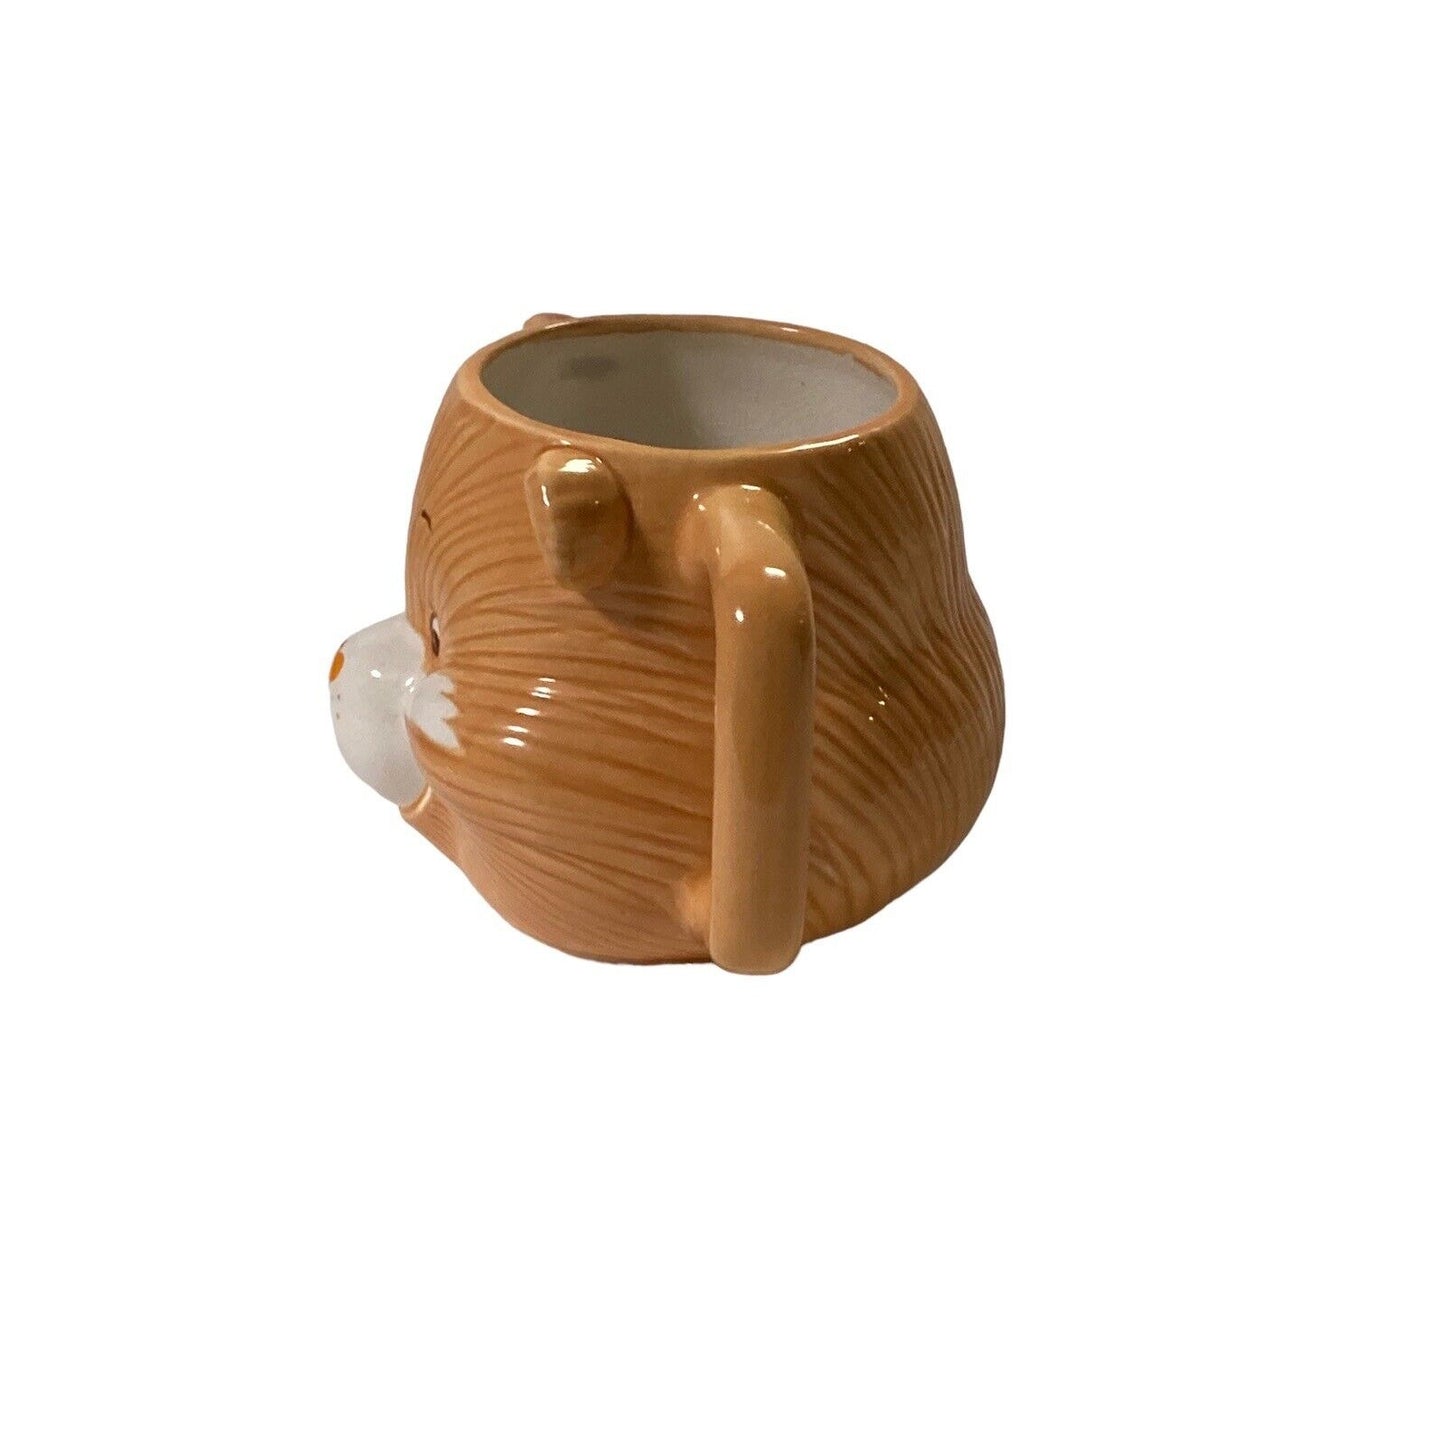 American Greetings Care Bears Friend Bear Vintage Ceramic Coffee Tea Mug Cup